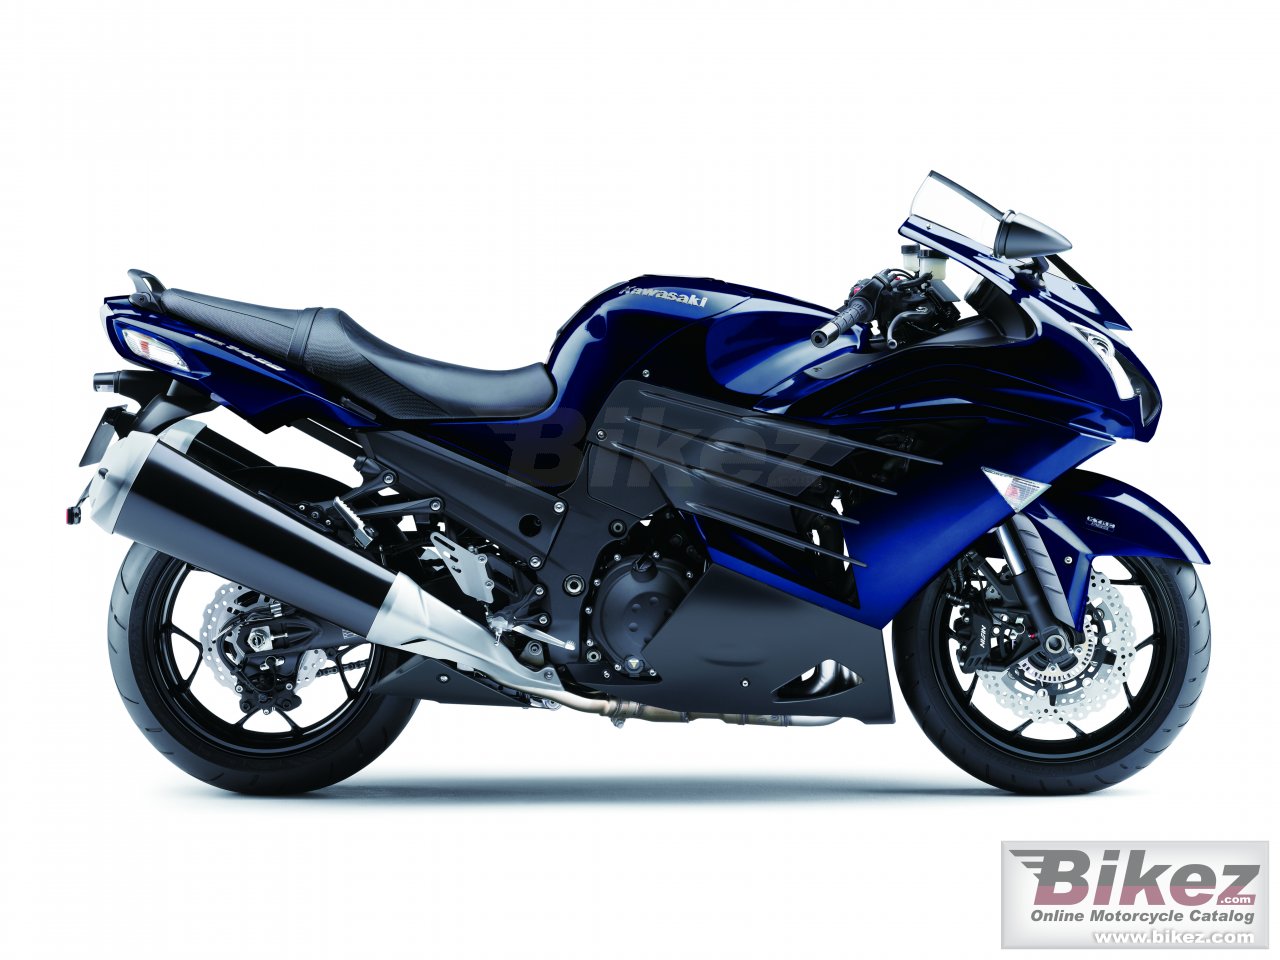 Kawasaki ZZR 1400 Special Edition